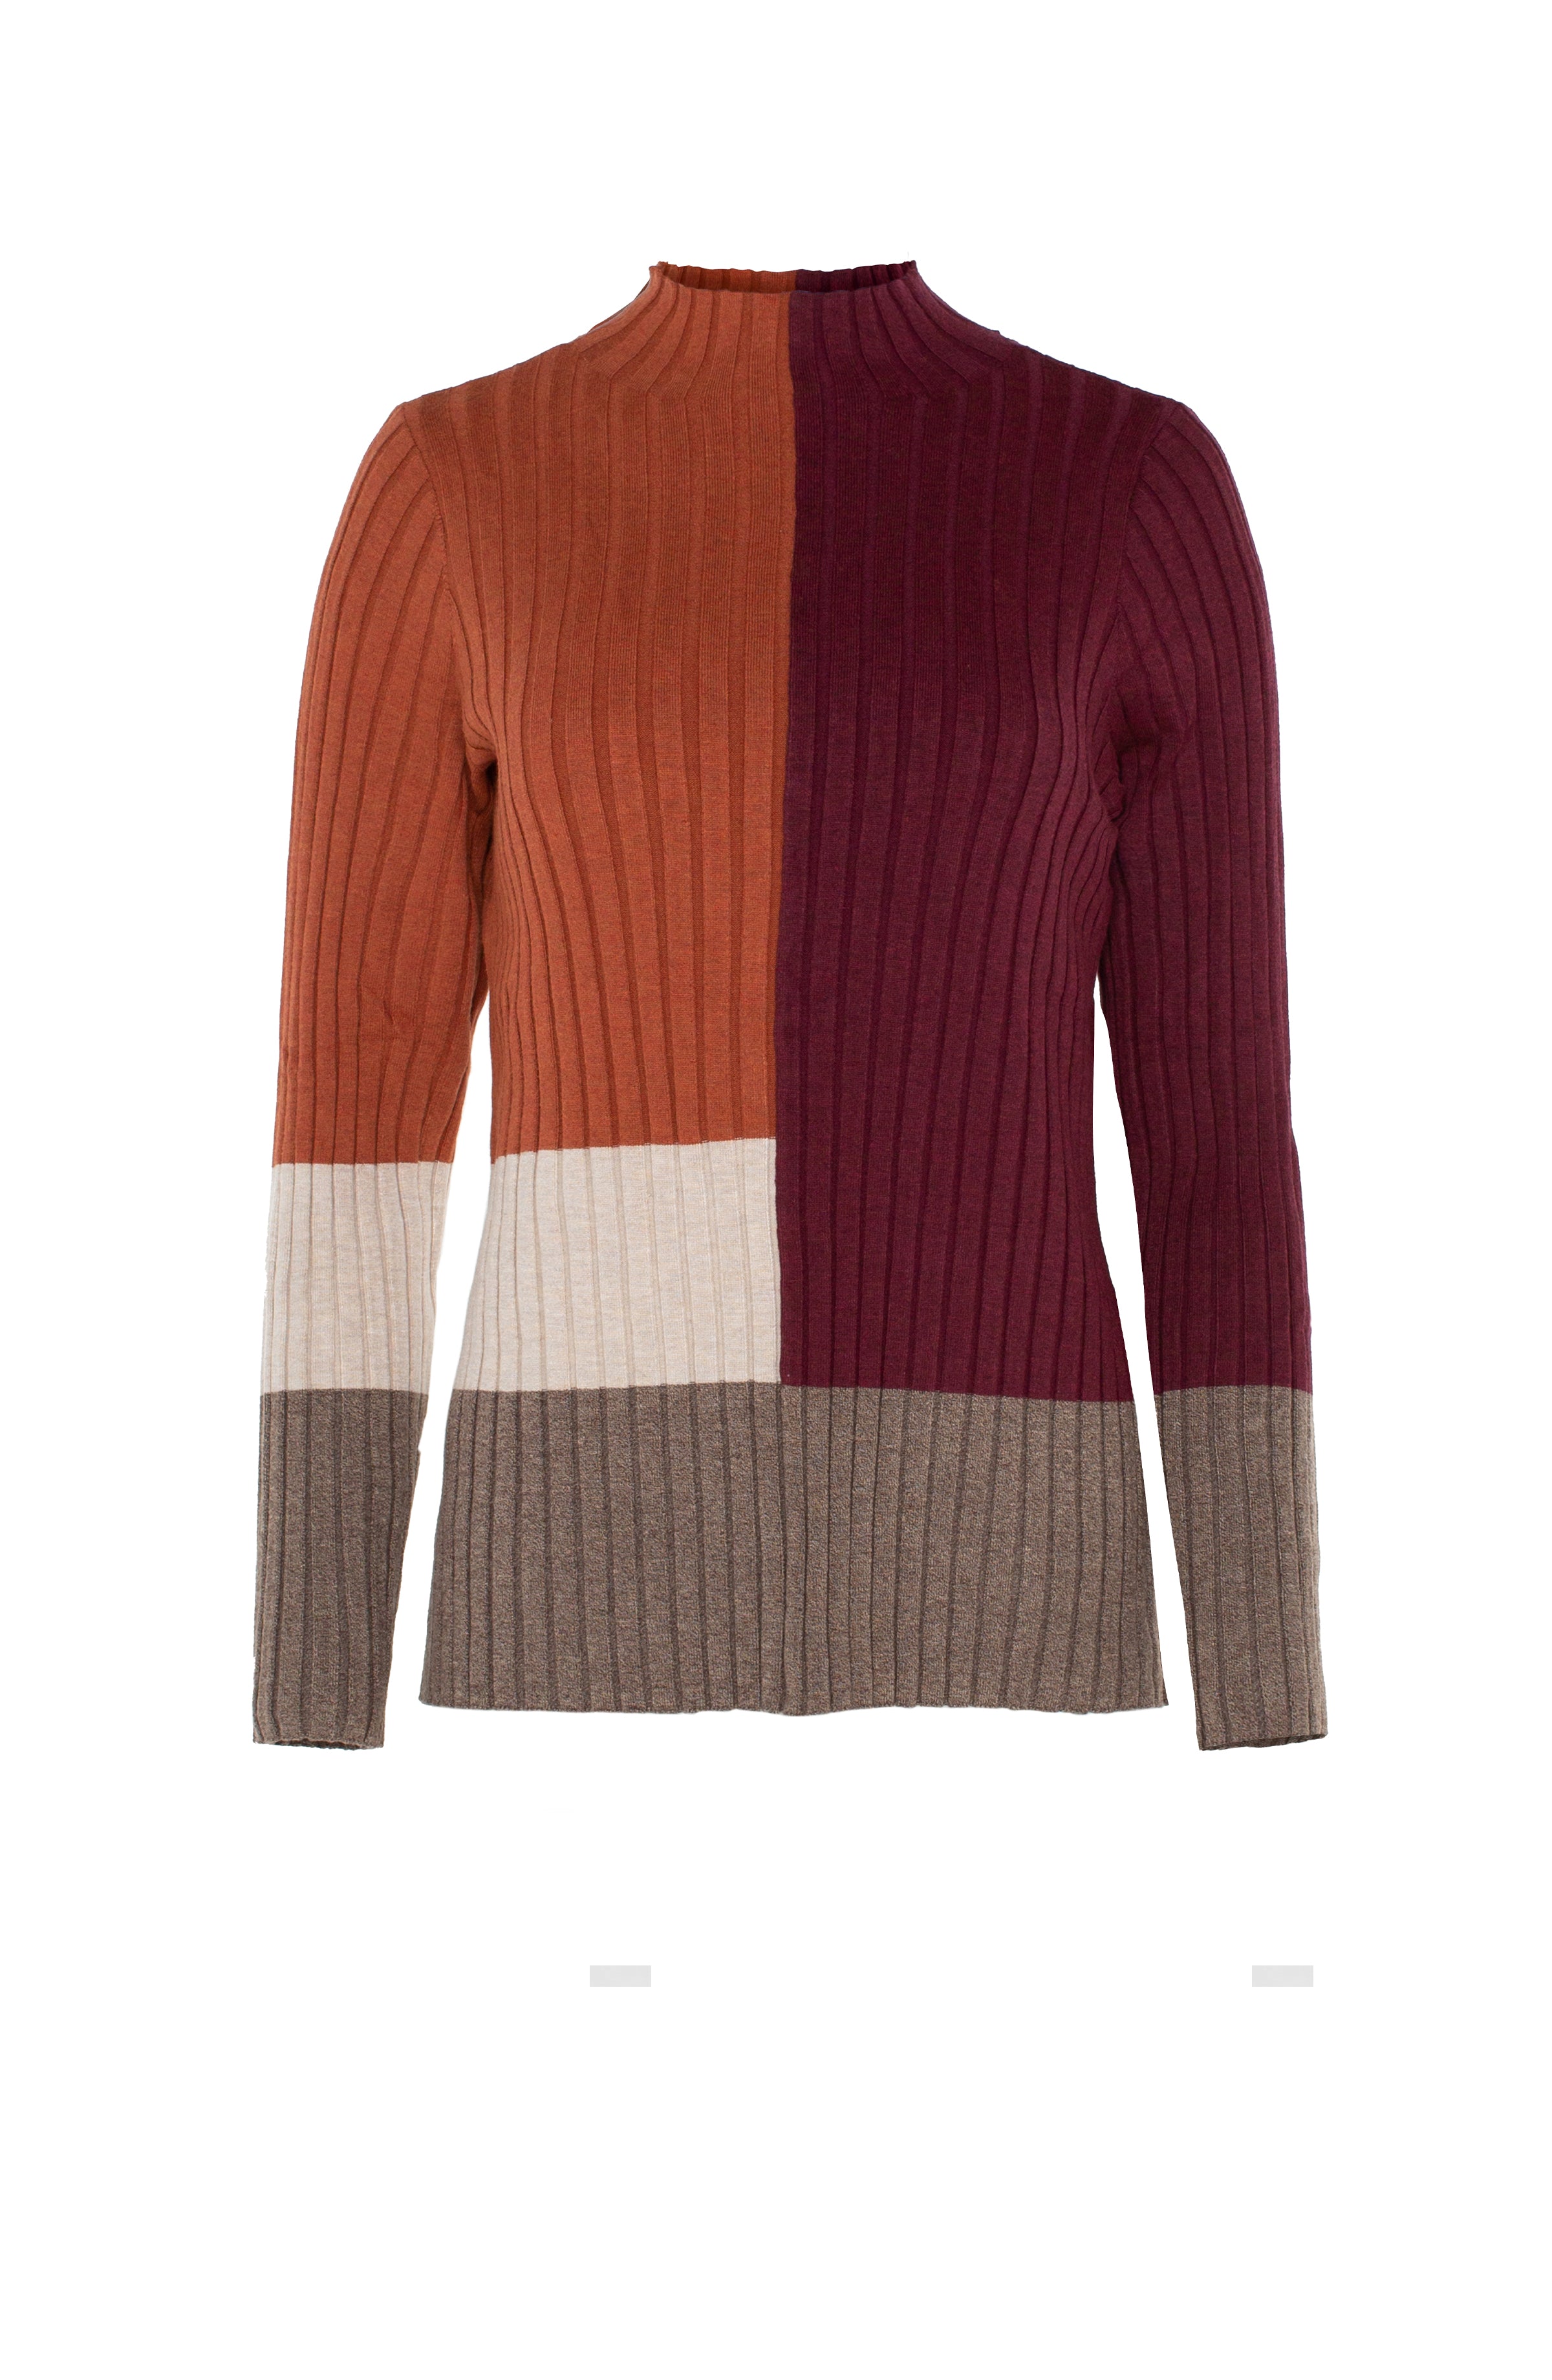 Mock Neck Pullover Sweater - Burgundy/Rust Colorblock